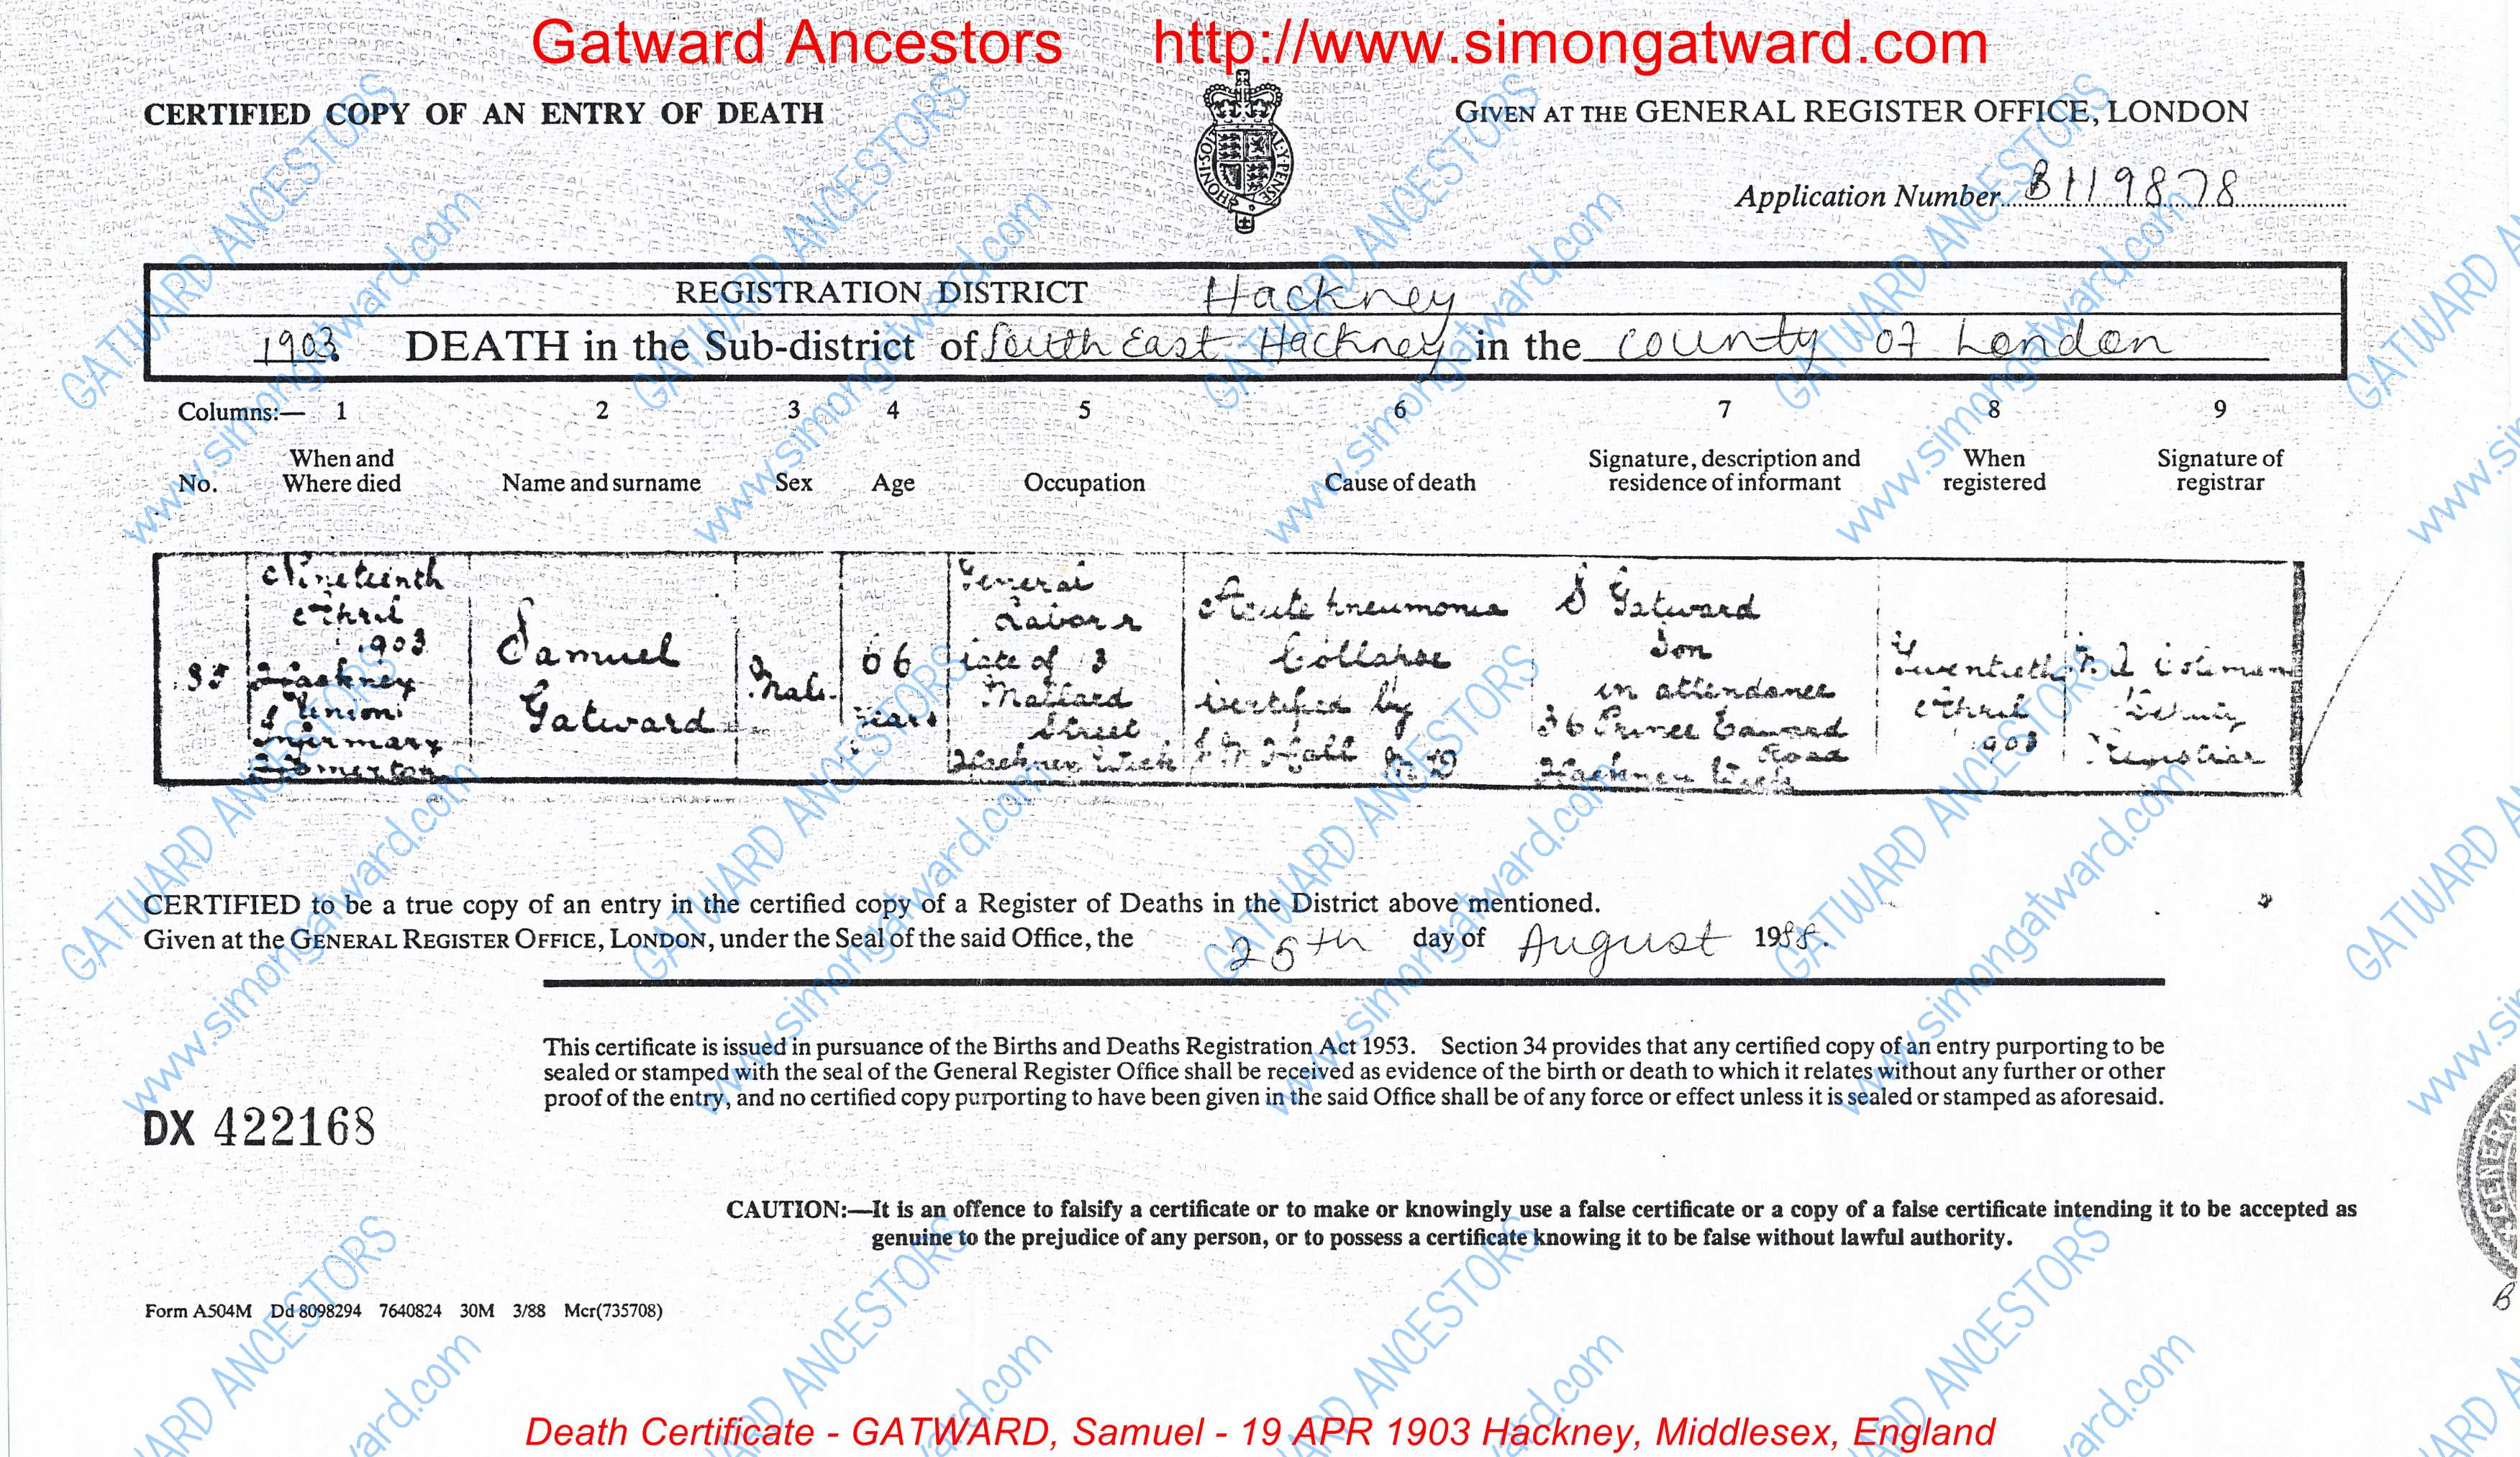 Death Certificate GATWARD Samuel 19 APR 1903 Hackney Middlesex